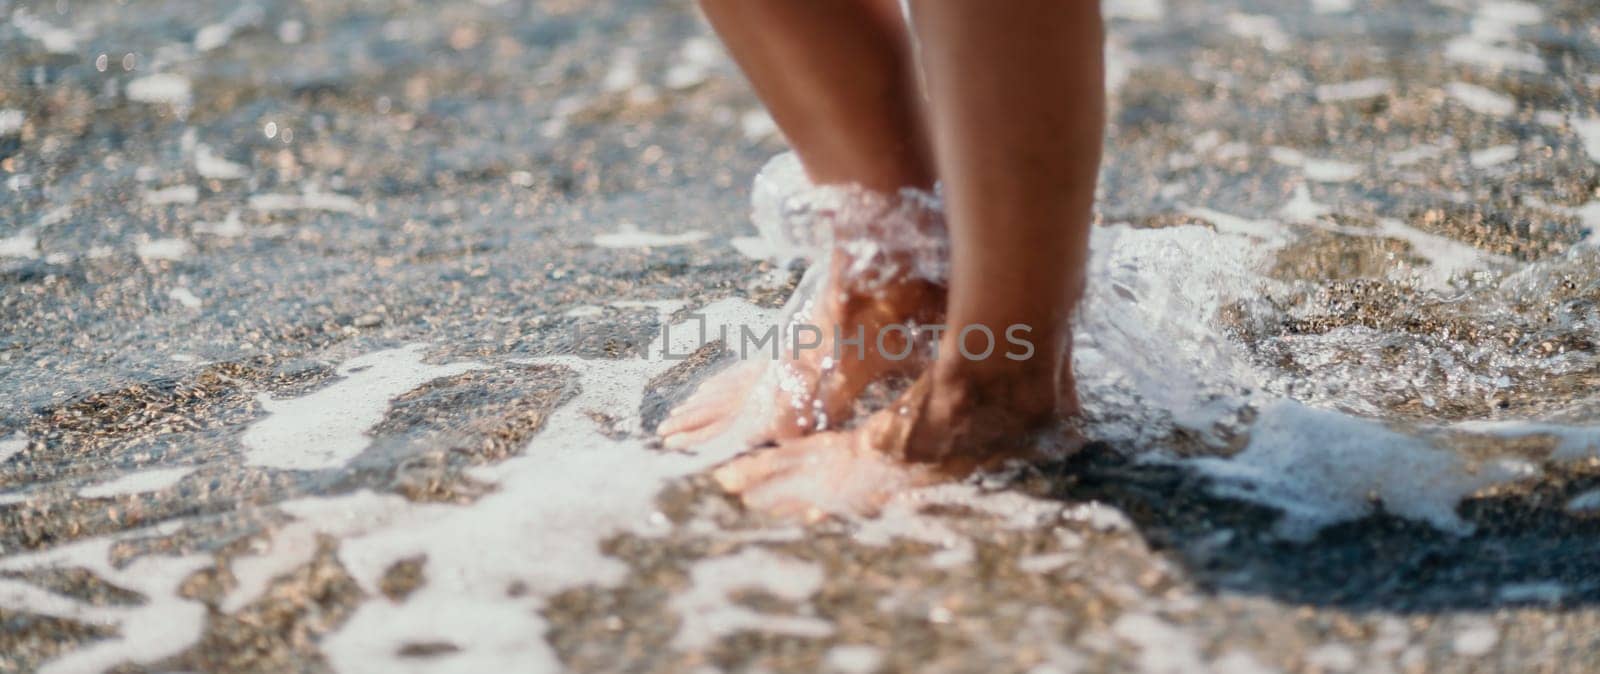 A woman walks along the beach, legs close-up. Barefoot woman sta by panophotograph